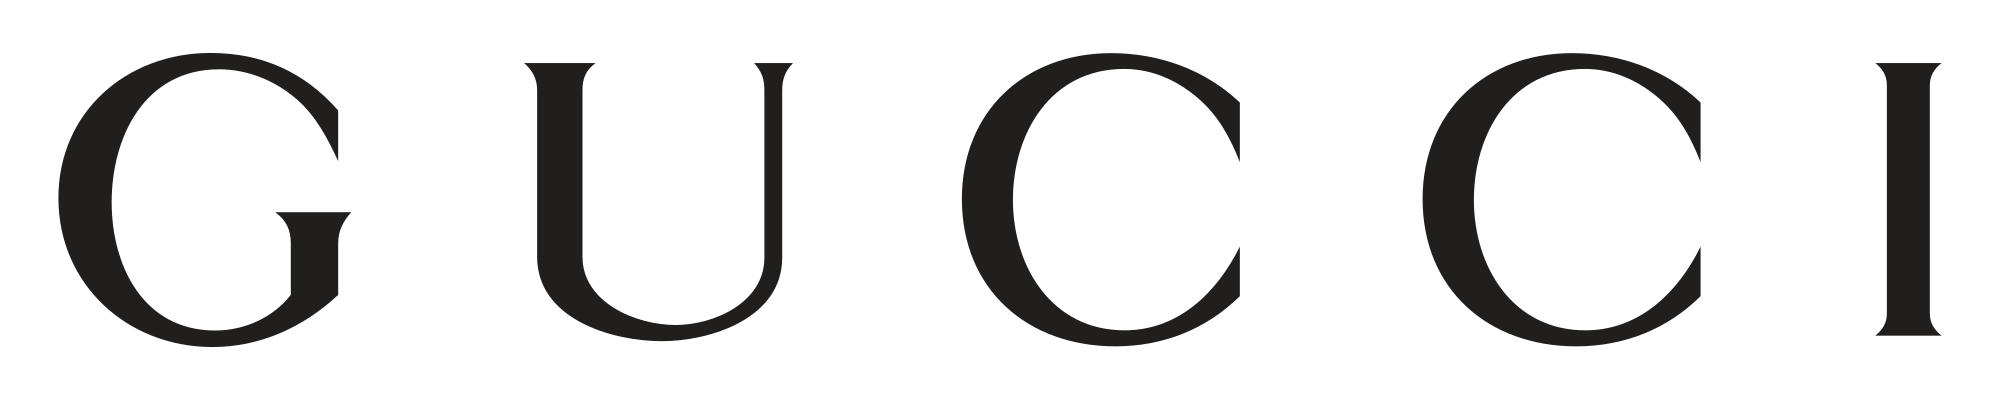 Gucci Logo PNG - 101547